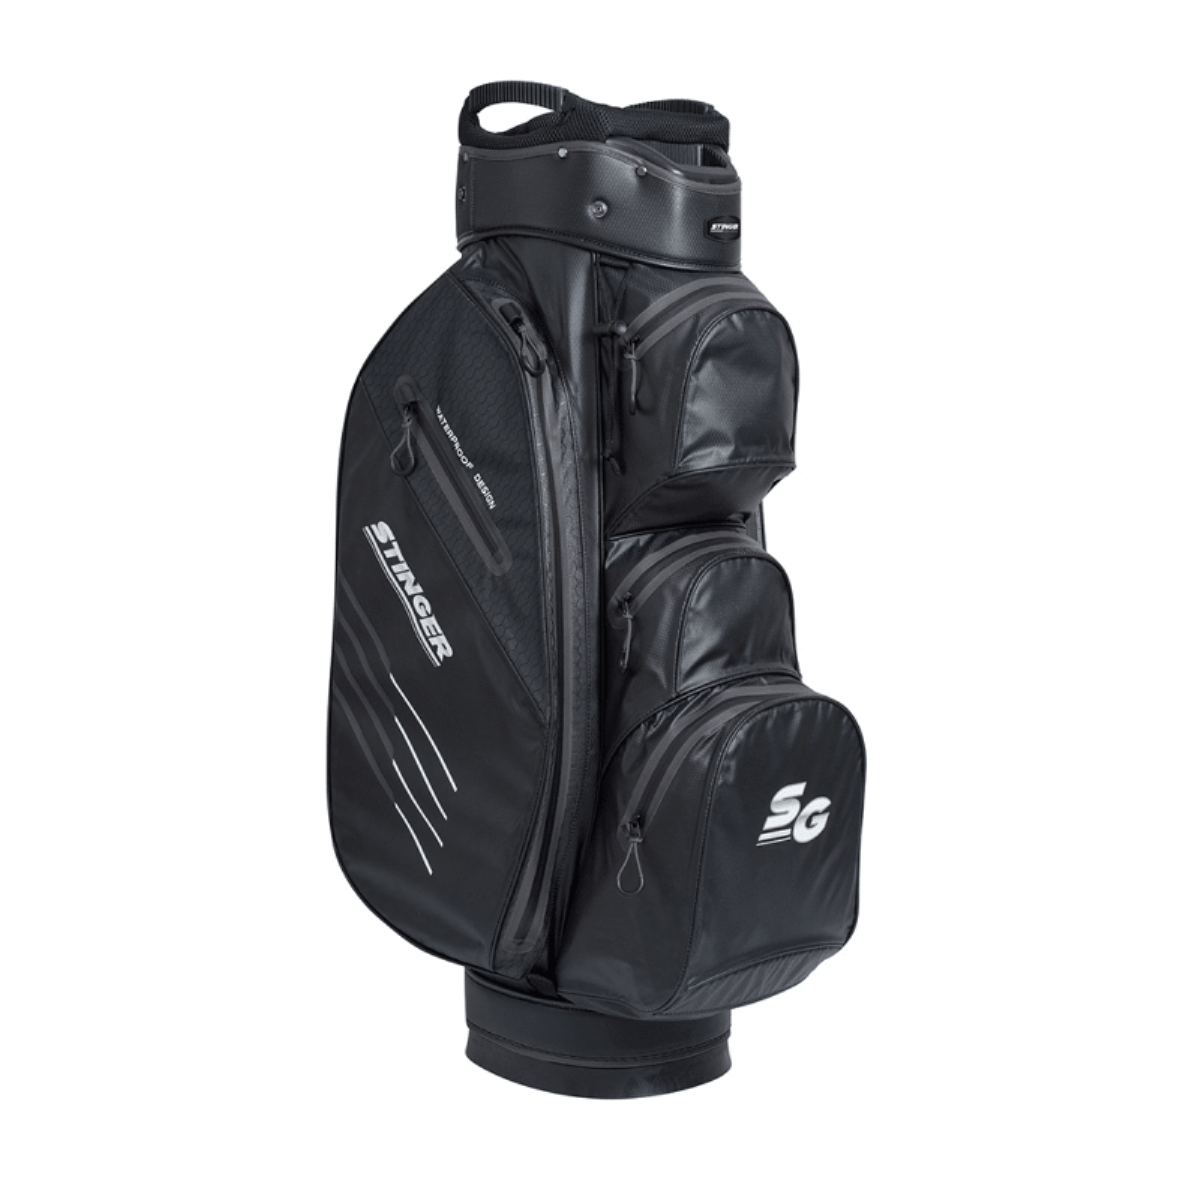 Stinger Waterproof Golf Bag Black/Grey